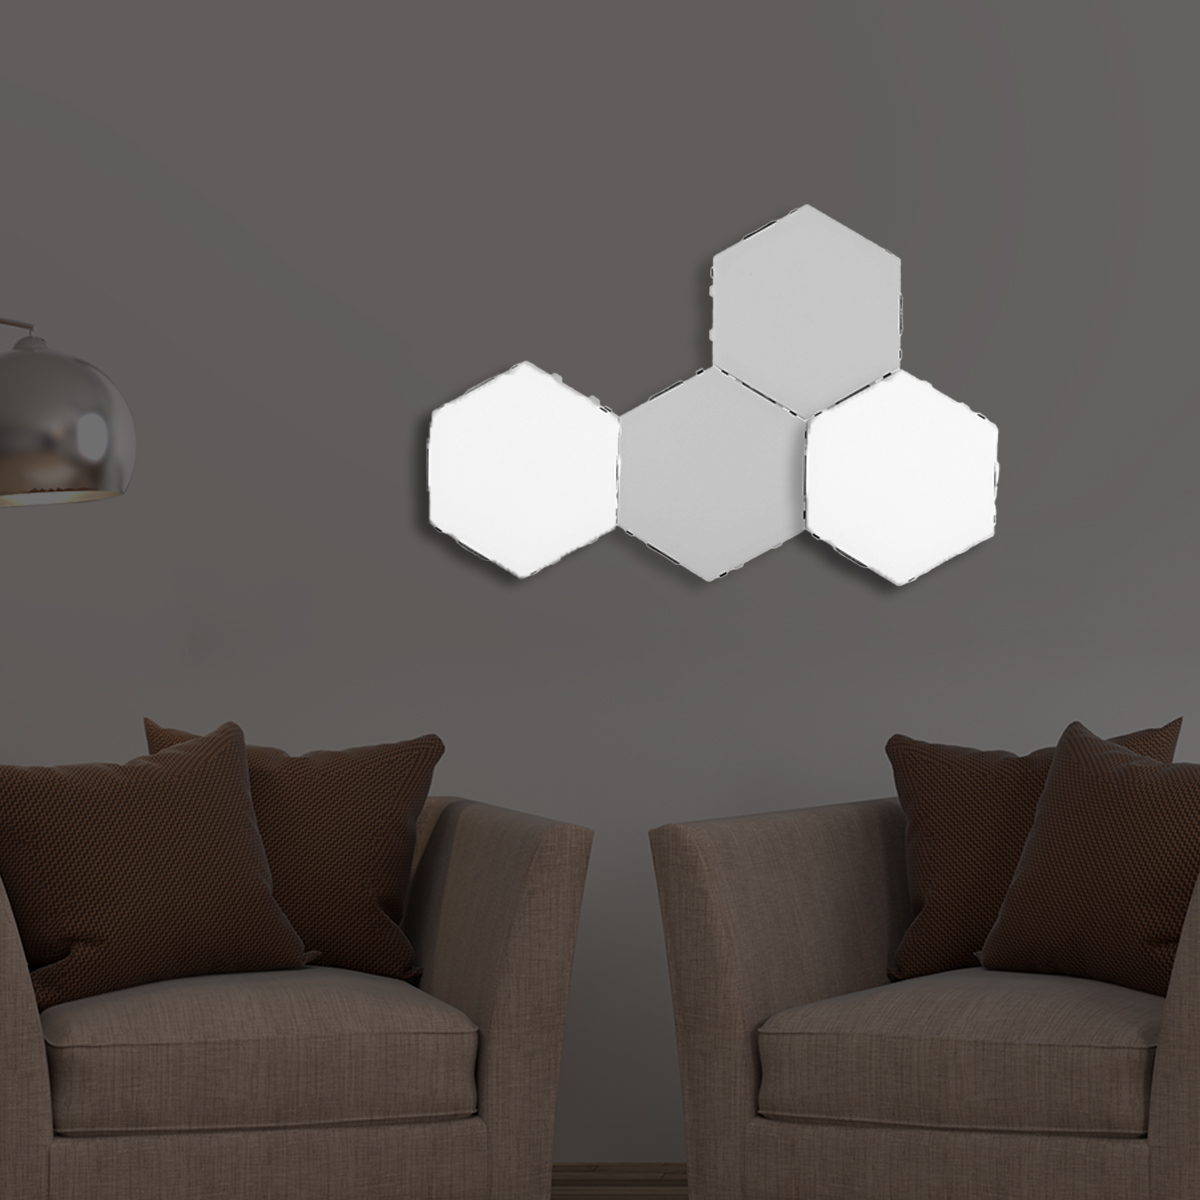 4x-Modular-LED-Touch-Wall-Lamp-Hexagonal-Honeycomb-Magnetic-Quantum-Night-Light-1789908-5